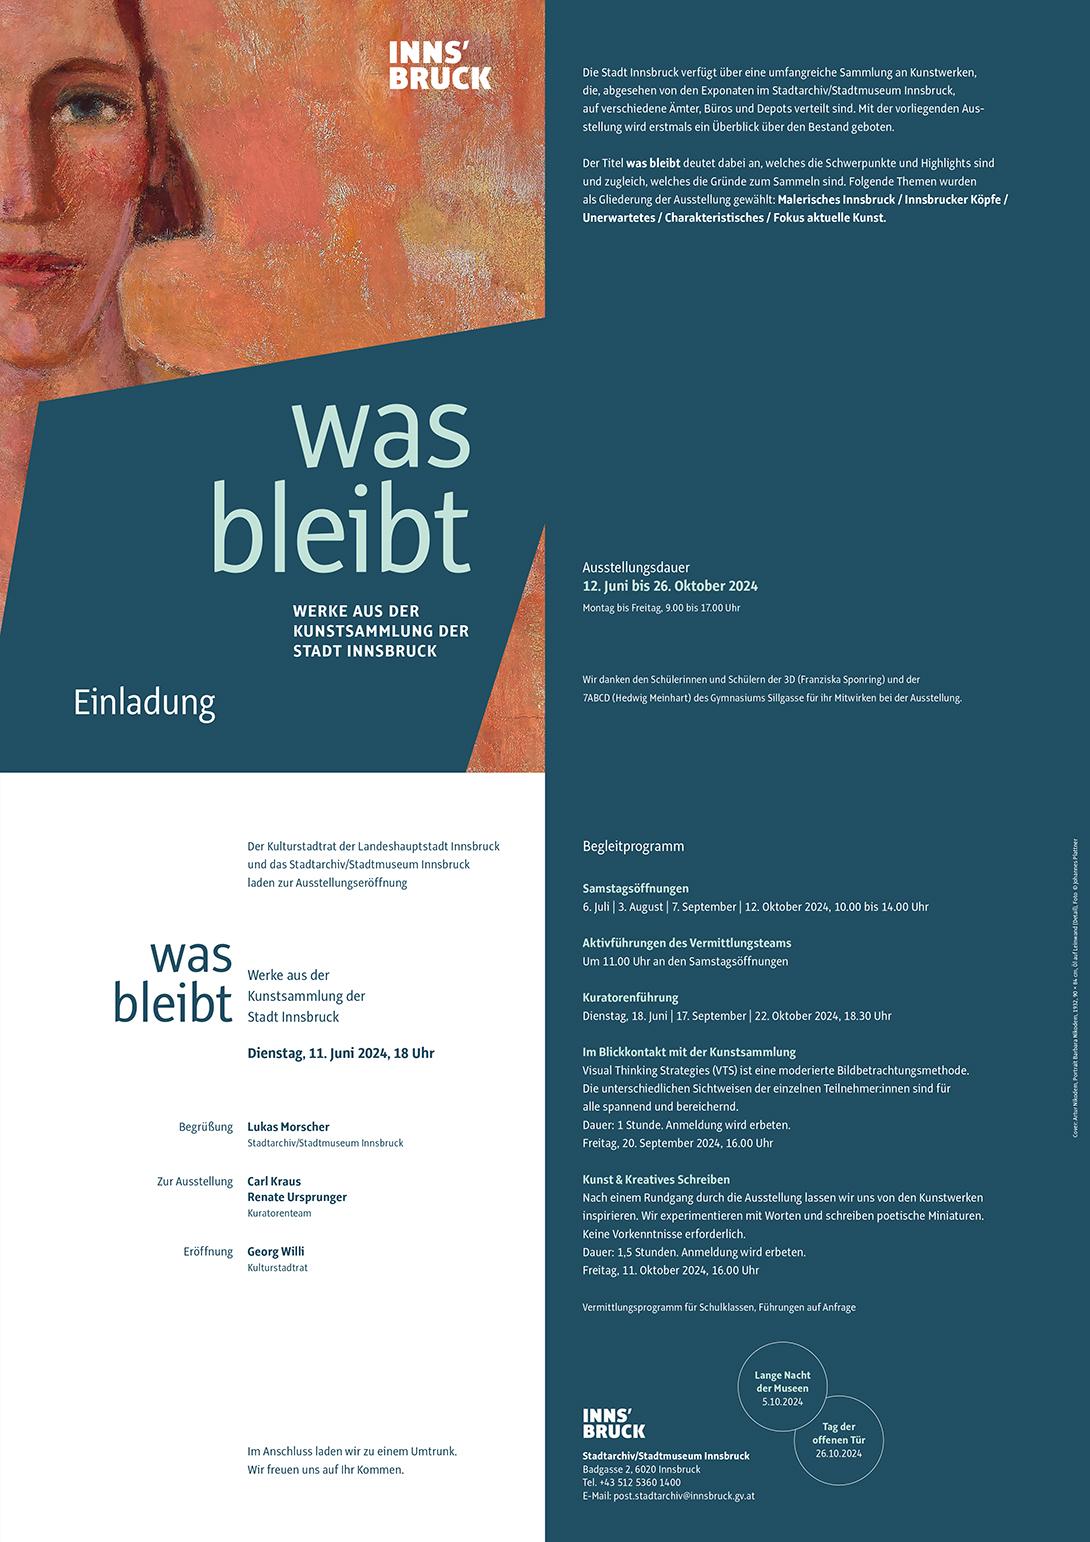 was bleibt; Werke aus der Kunstsammlung der Stadt Innsbruck; Martina Gasser; Stadtarchiv/Stadtmuseum Innsbruck